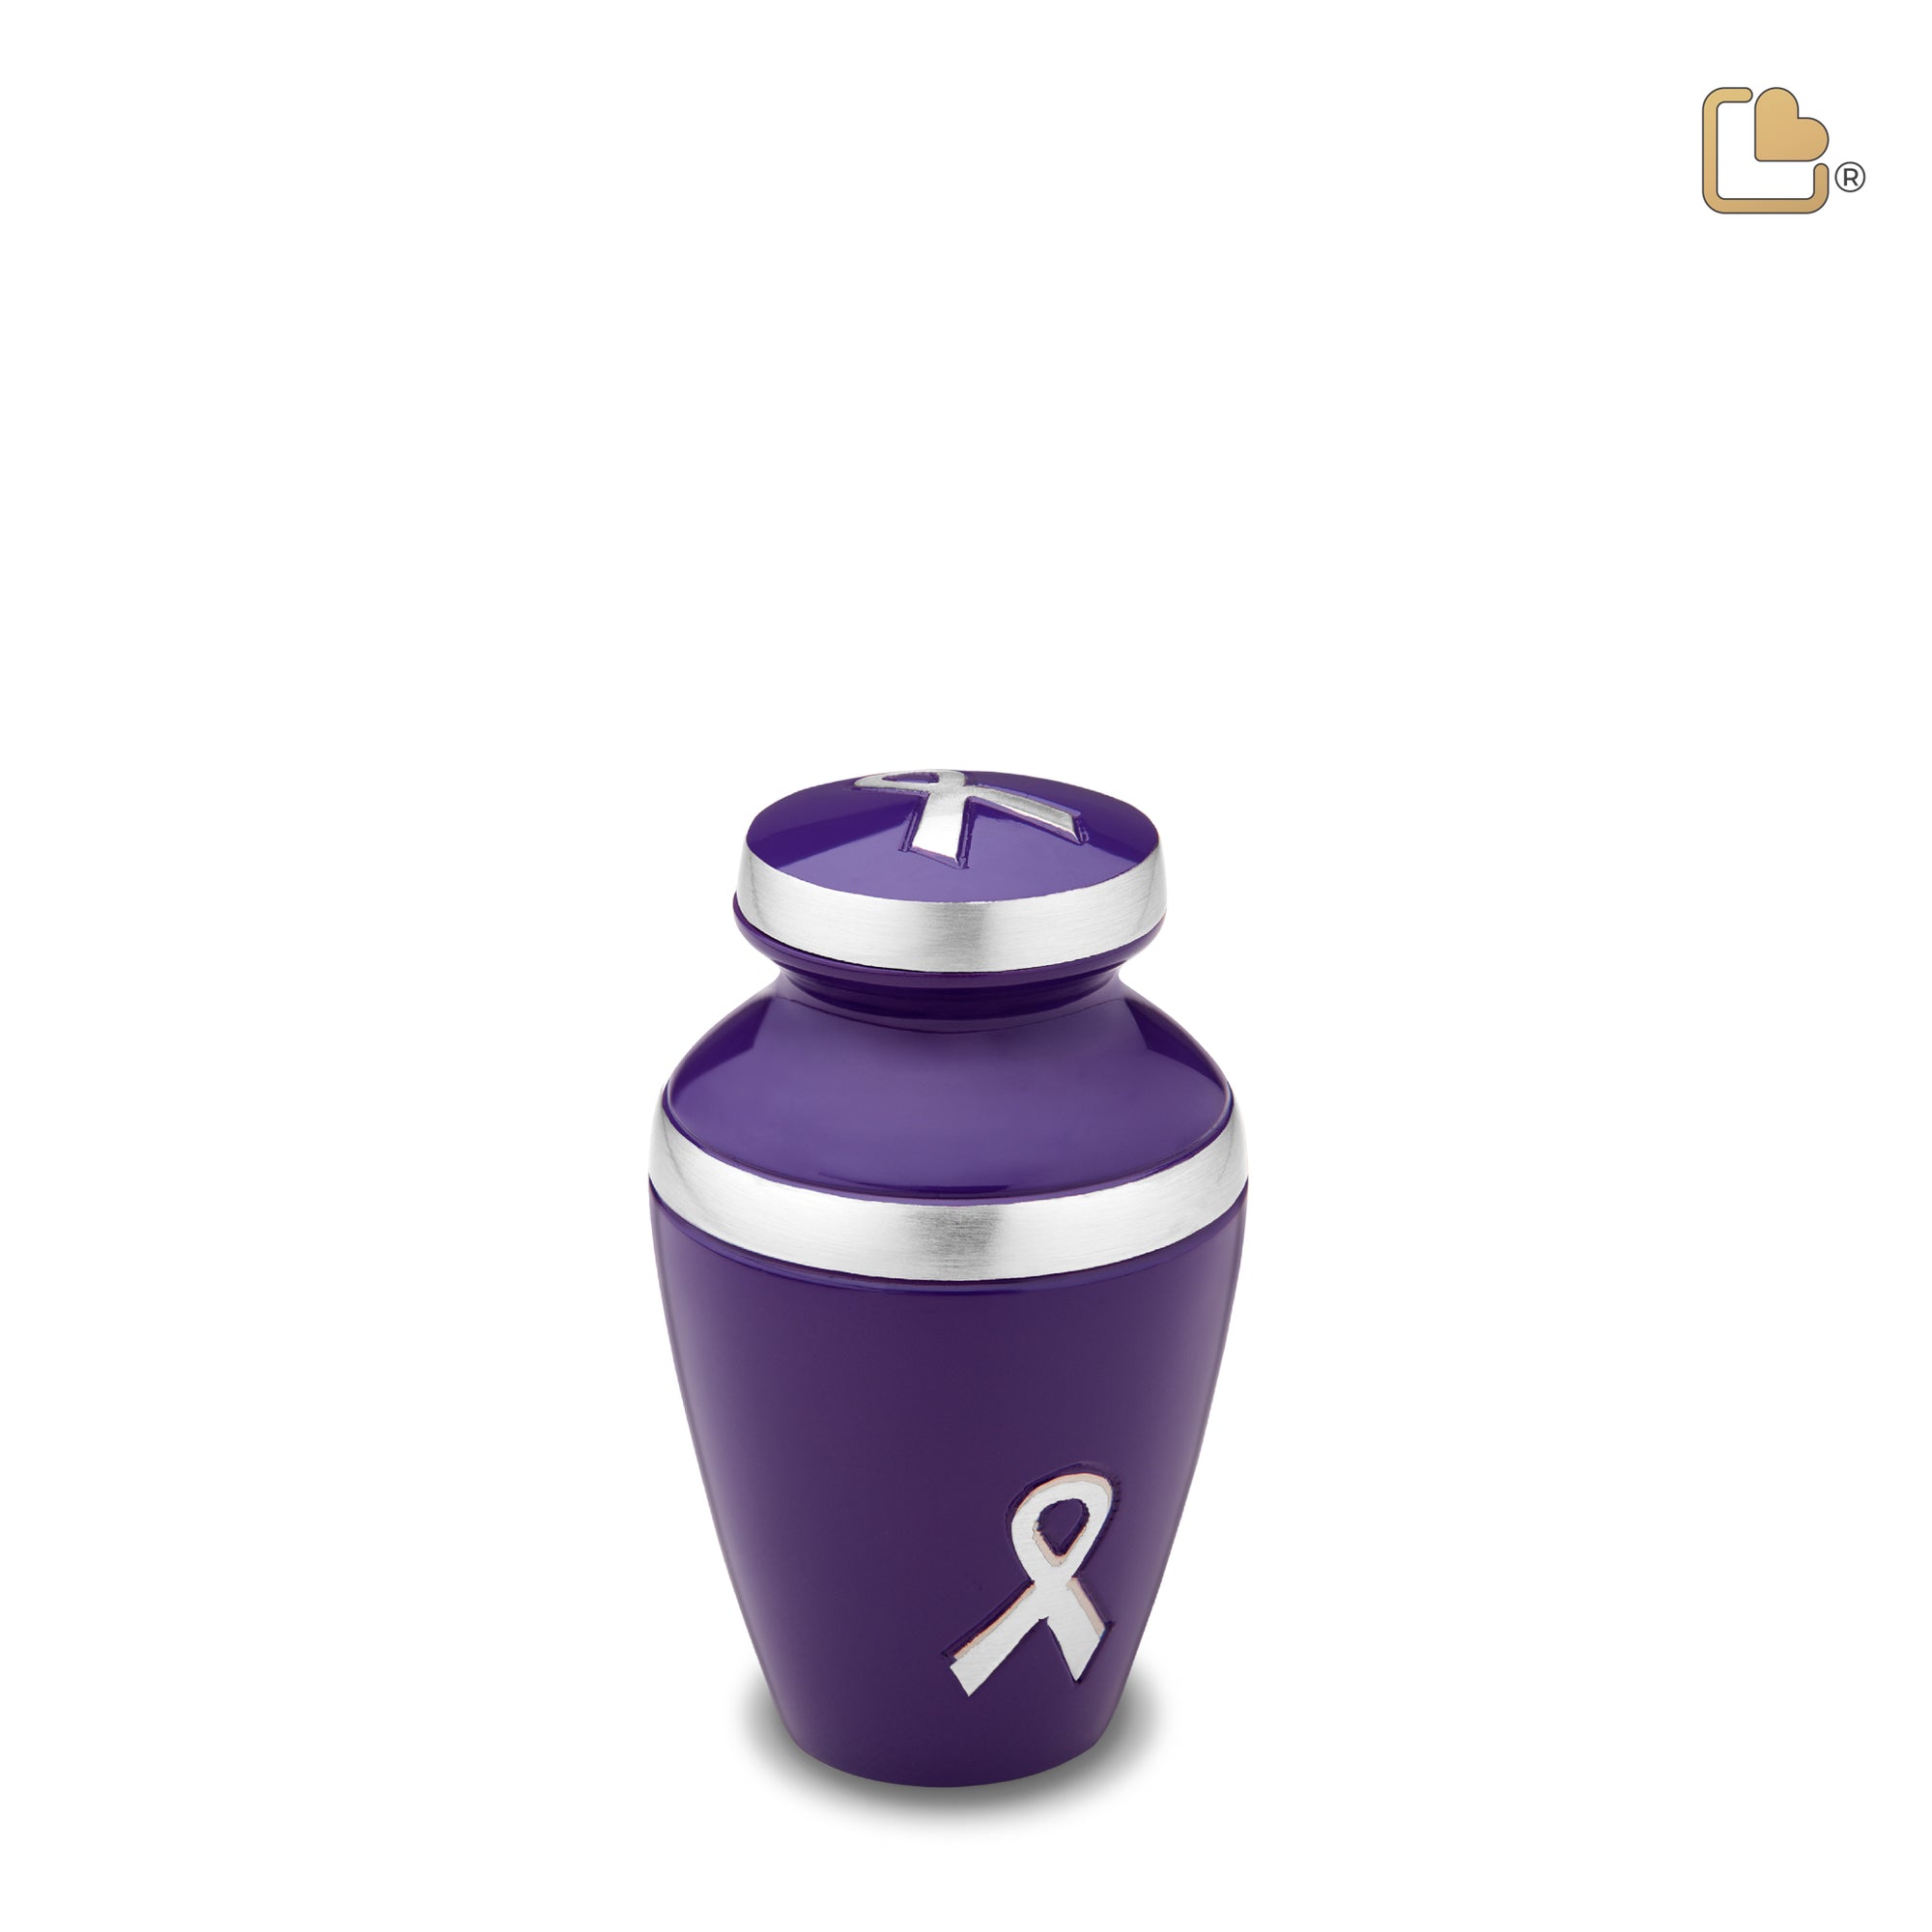 K901   Awareness Keepsake Urn Purple & Bru Pewter